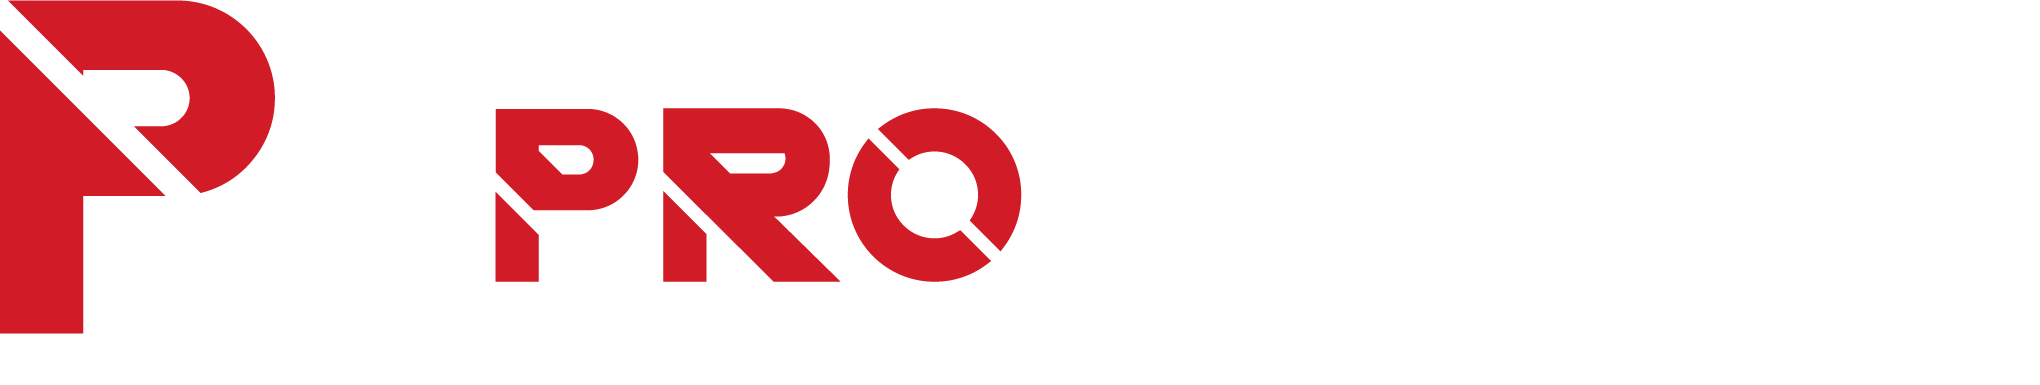 prodesign_logo